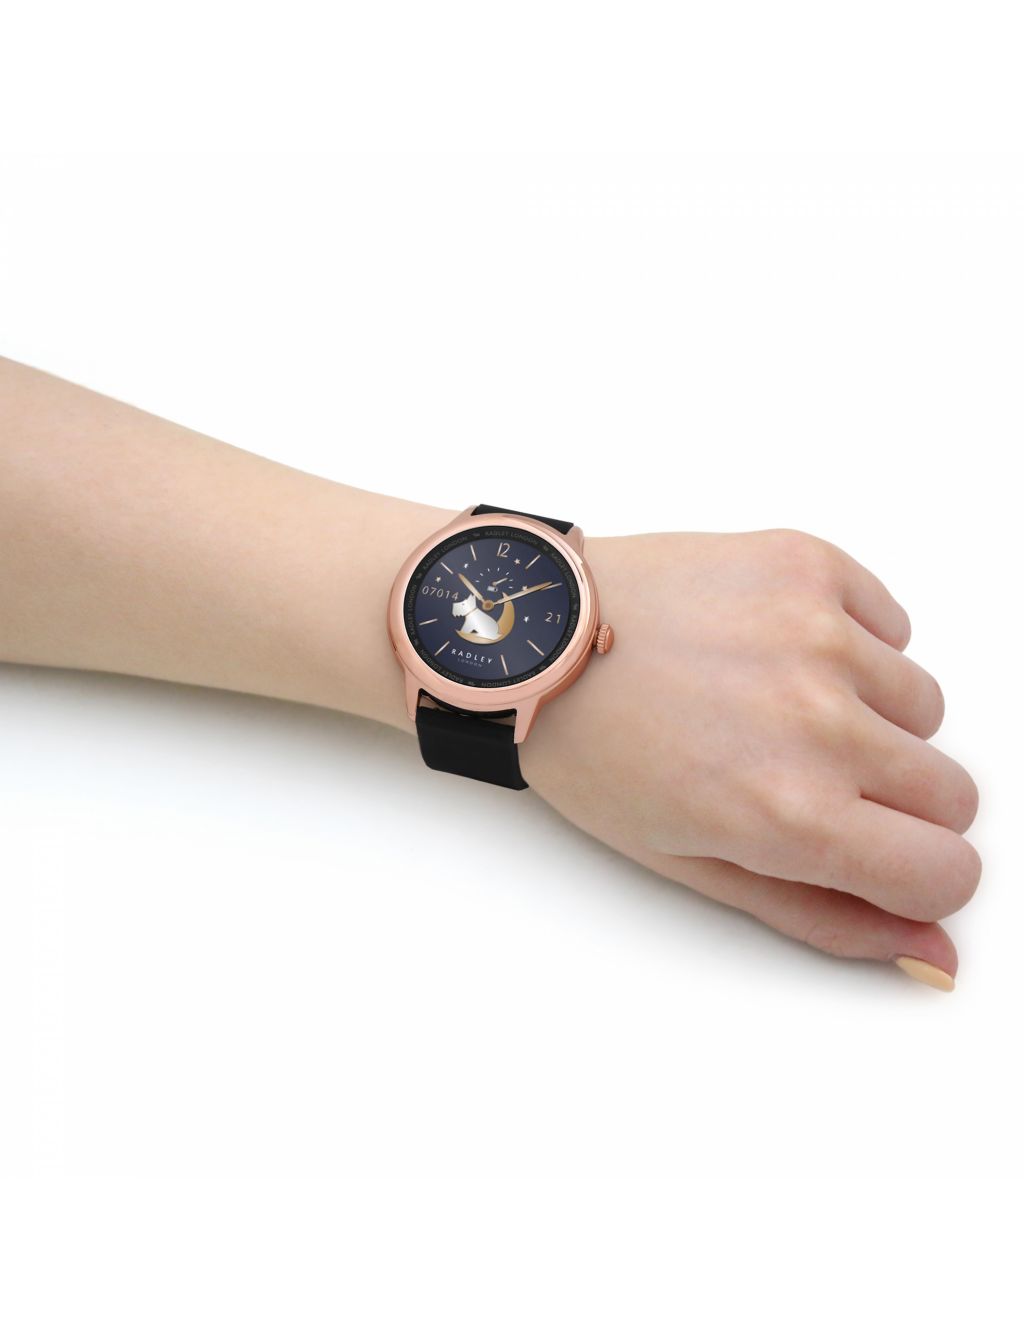 Radley Series 7 Bluetooth Smart Watch image 5